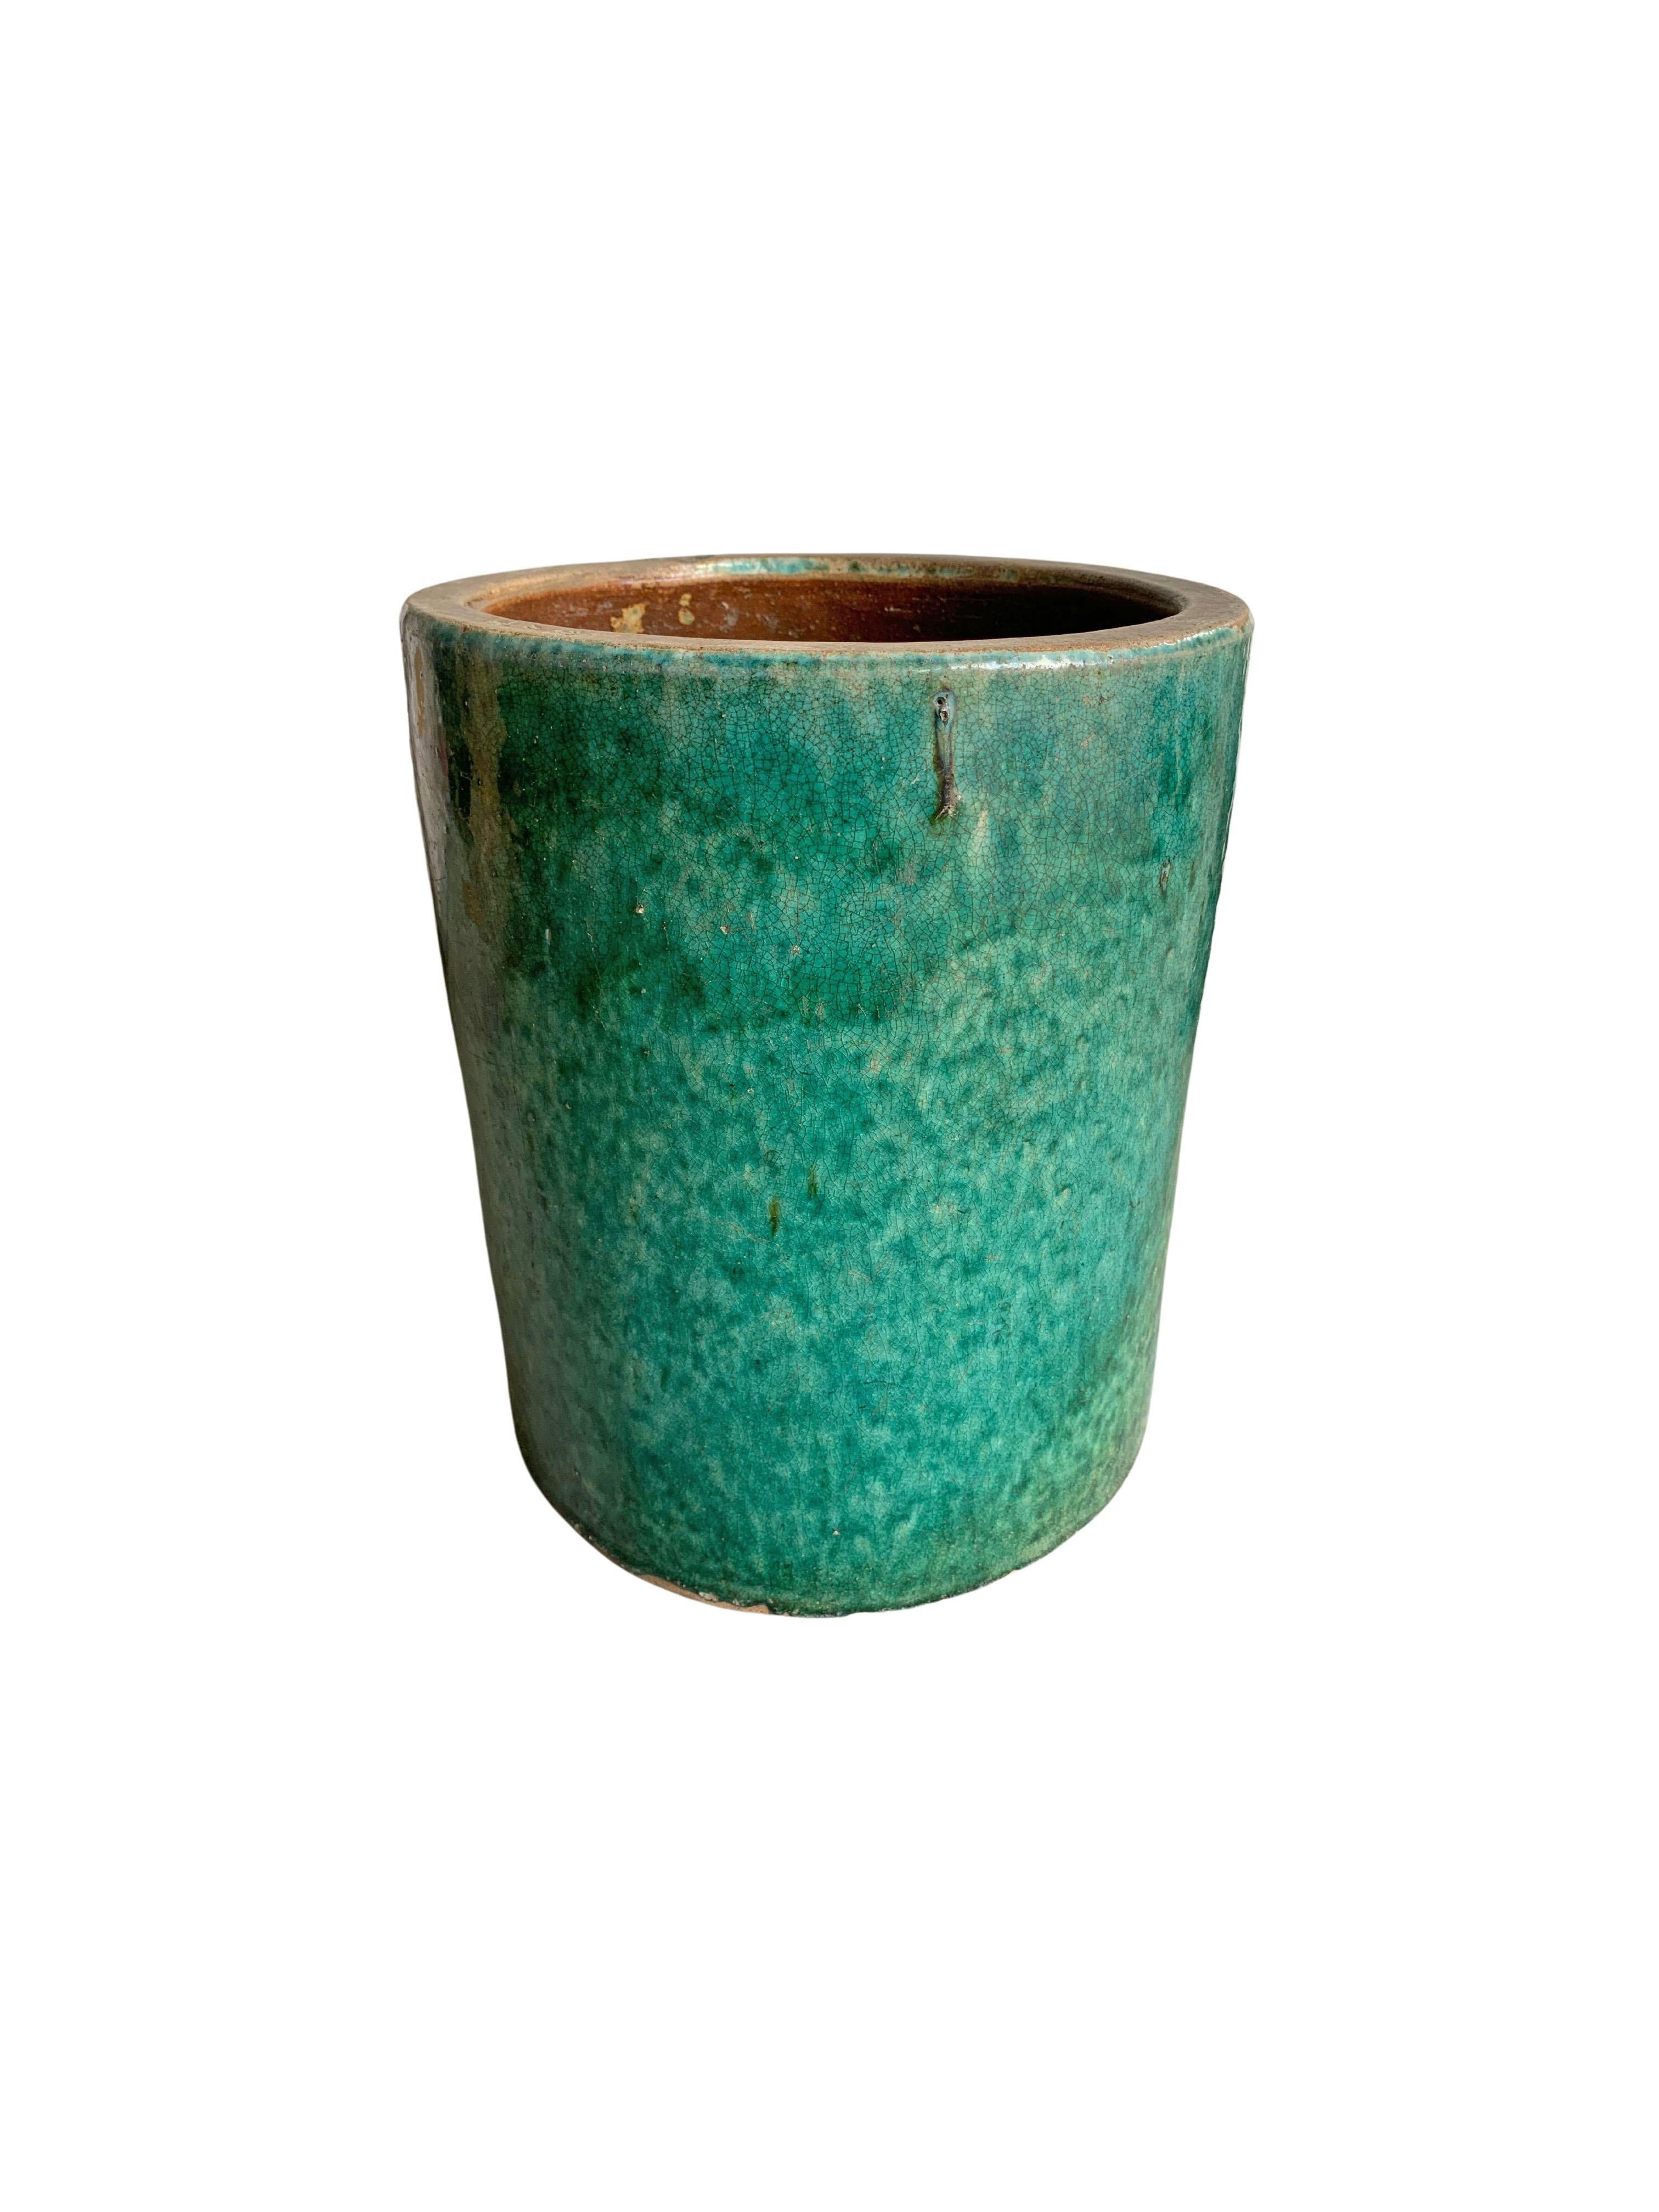 20th Century Chinese Green Glazed Ceramic Soy Sauce Storage Jar / Planter, c. 1900 For Sale